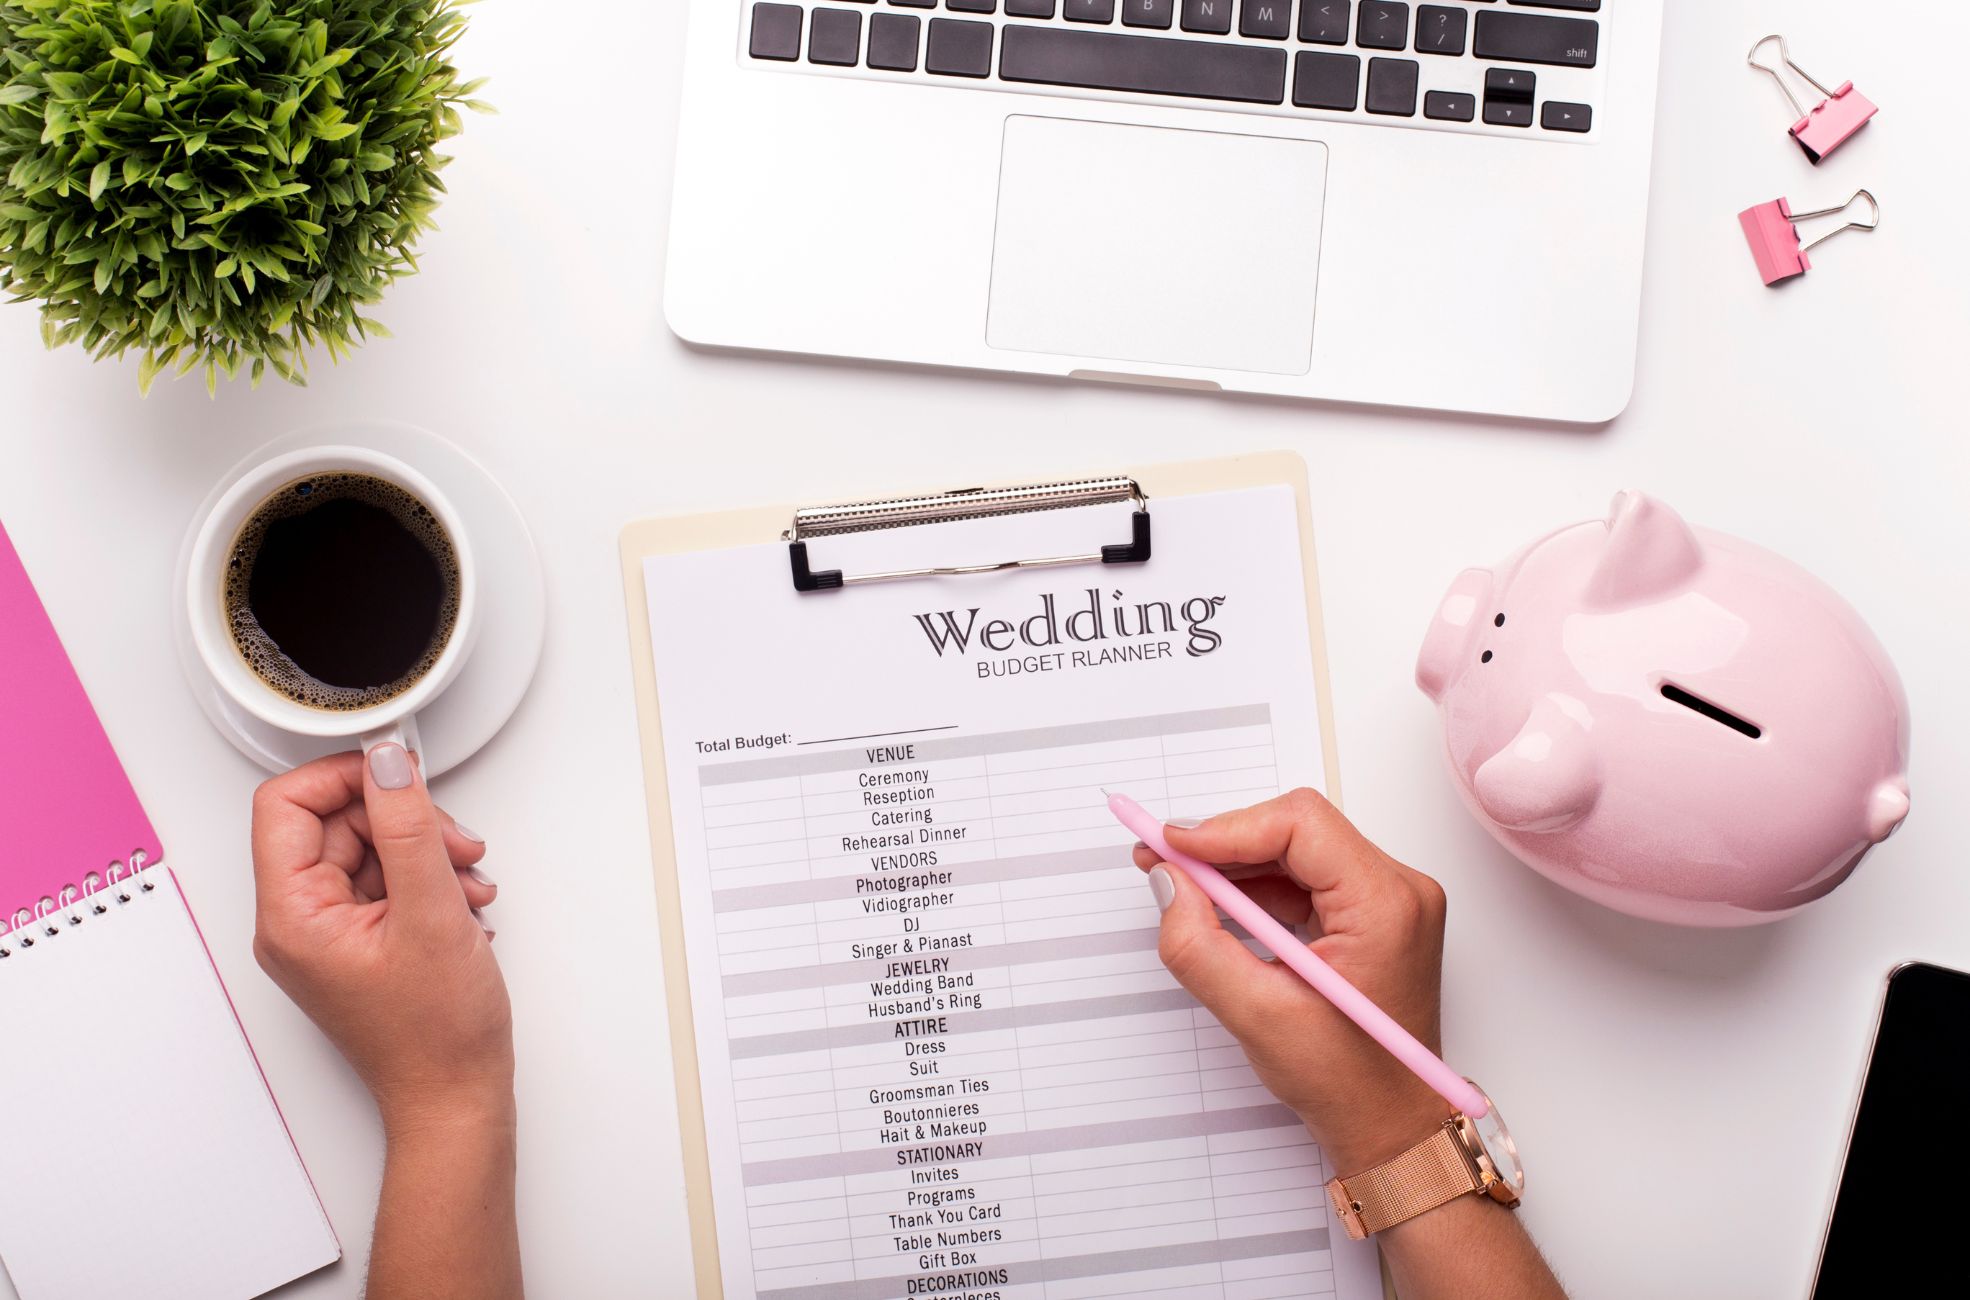 Wedding Budget On Desk